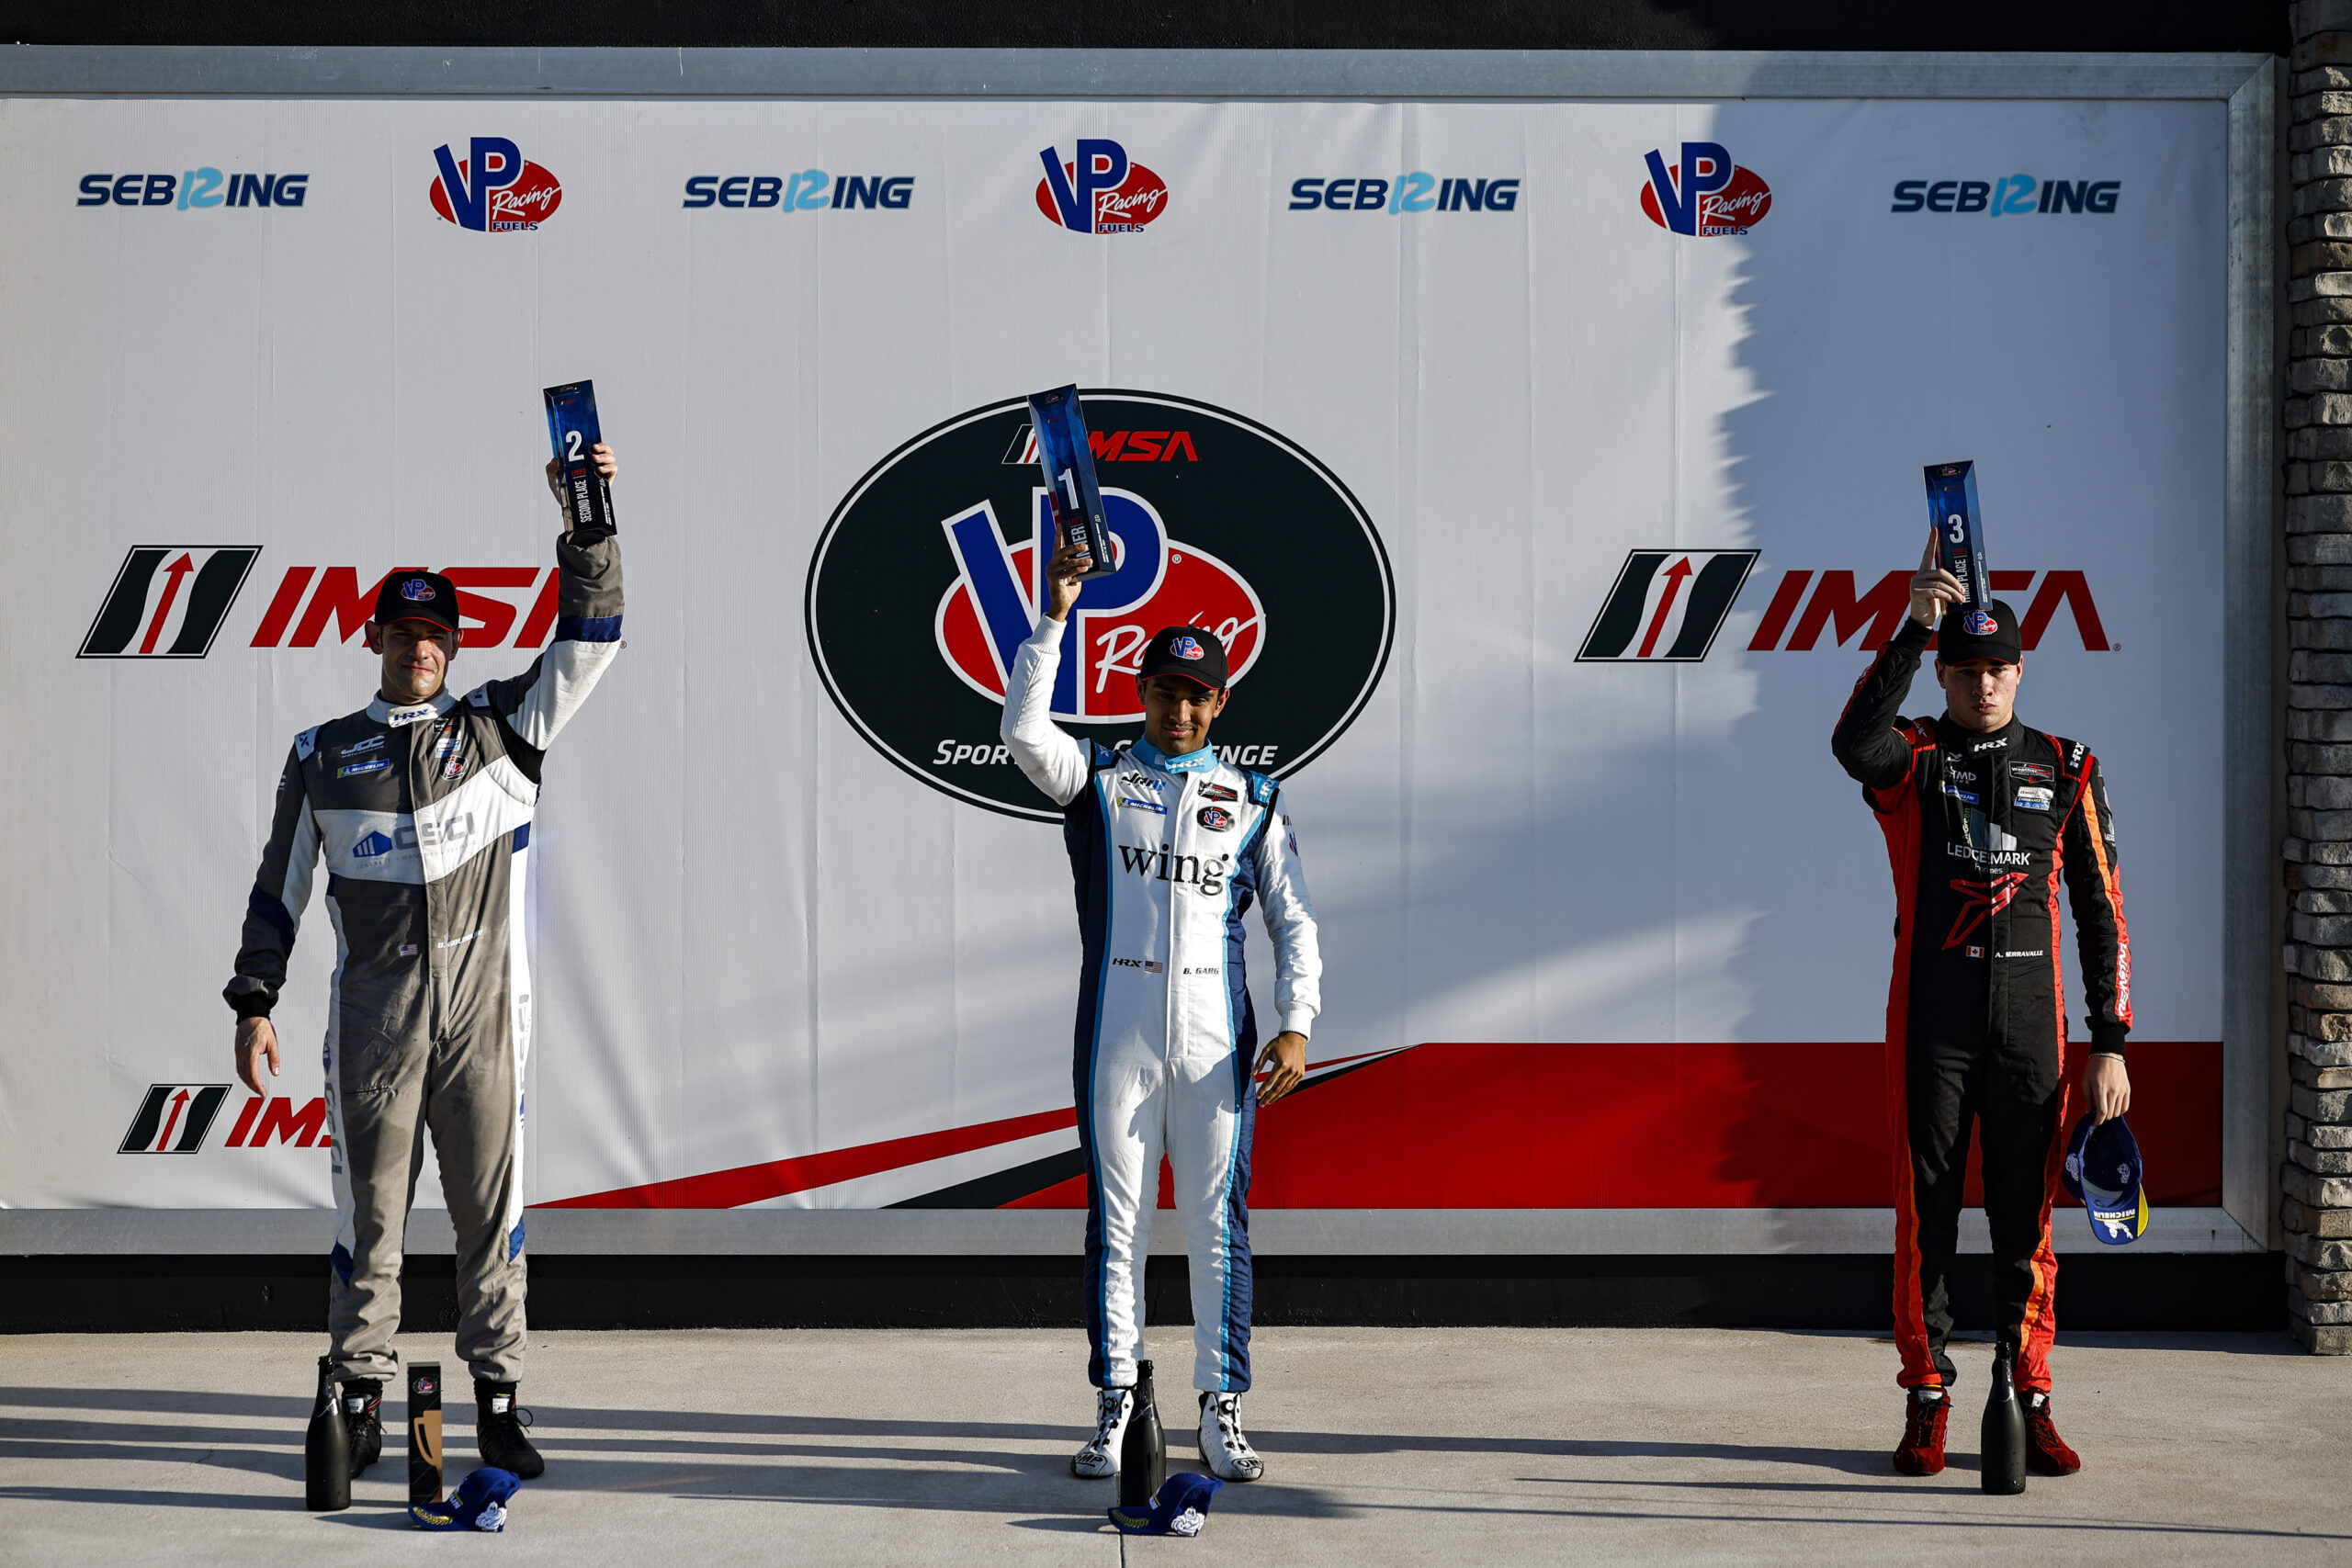 Jr III Racing Wins Twice at Sebring